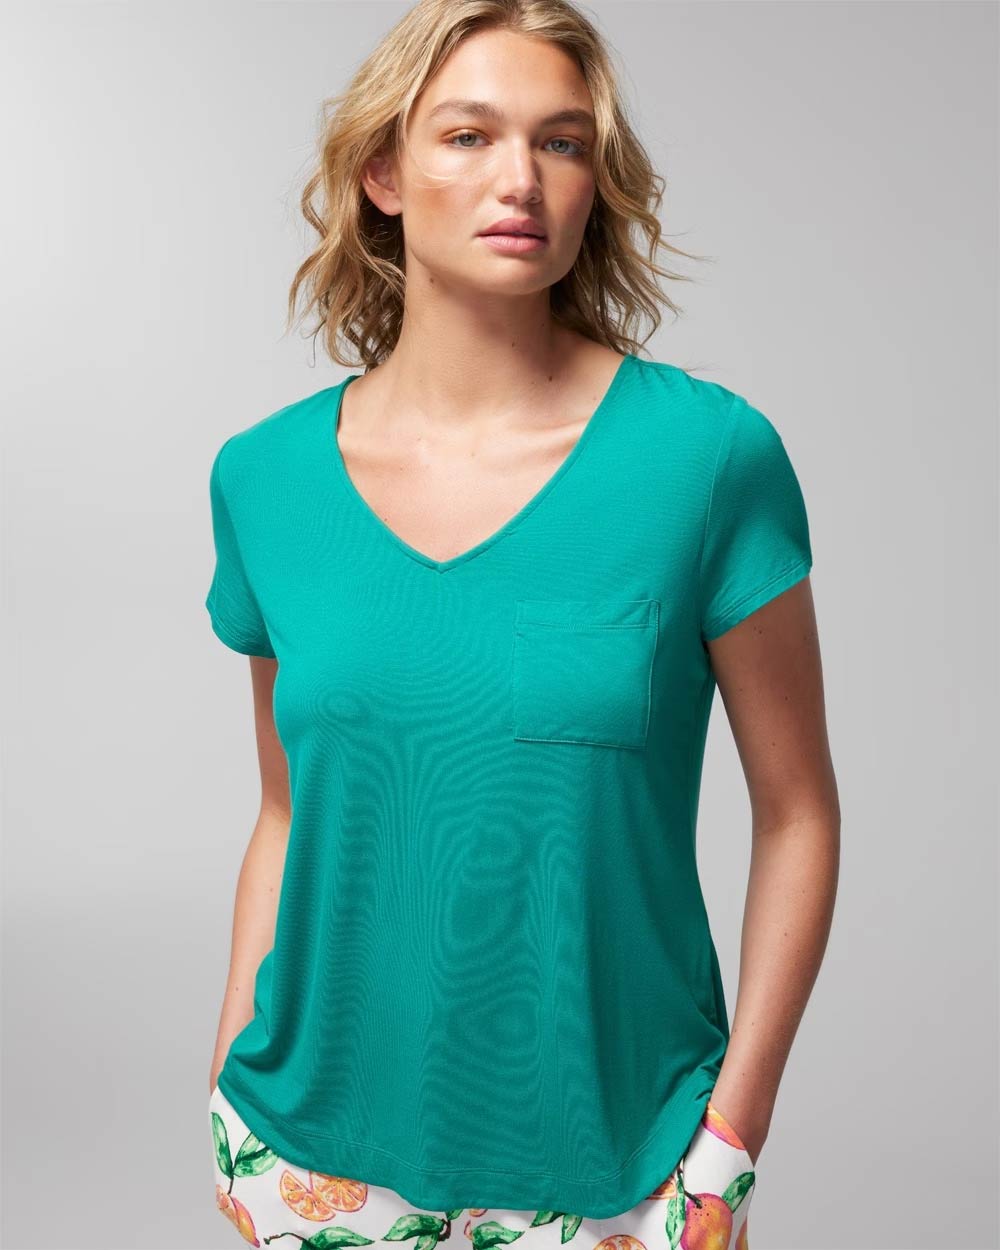 Soma<sup class=st-superscript>®</sup> women’s model wearing a teal green v-neck short-sleeve T-shirt.